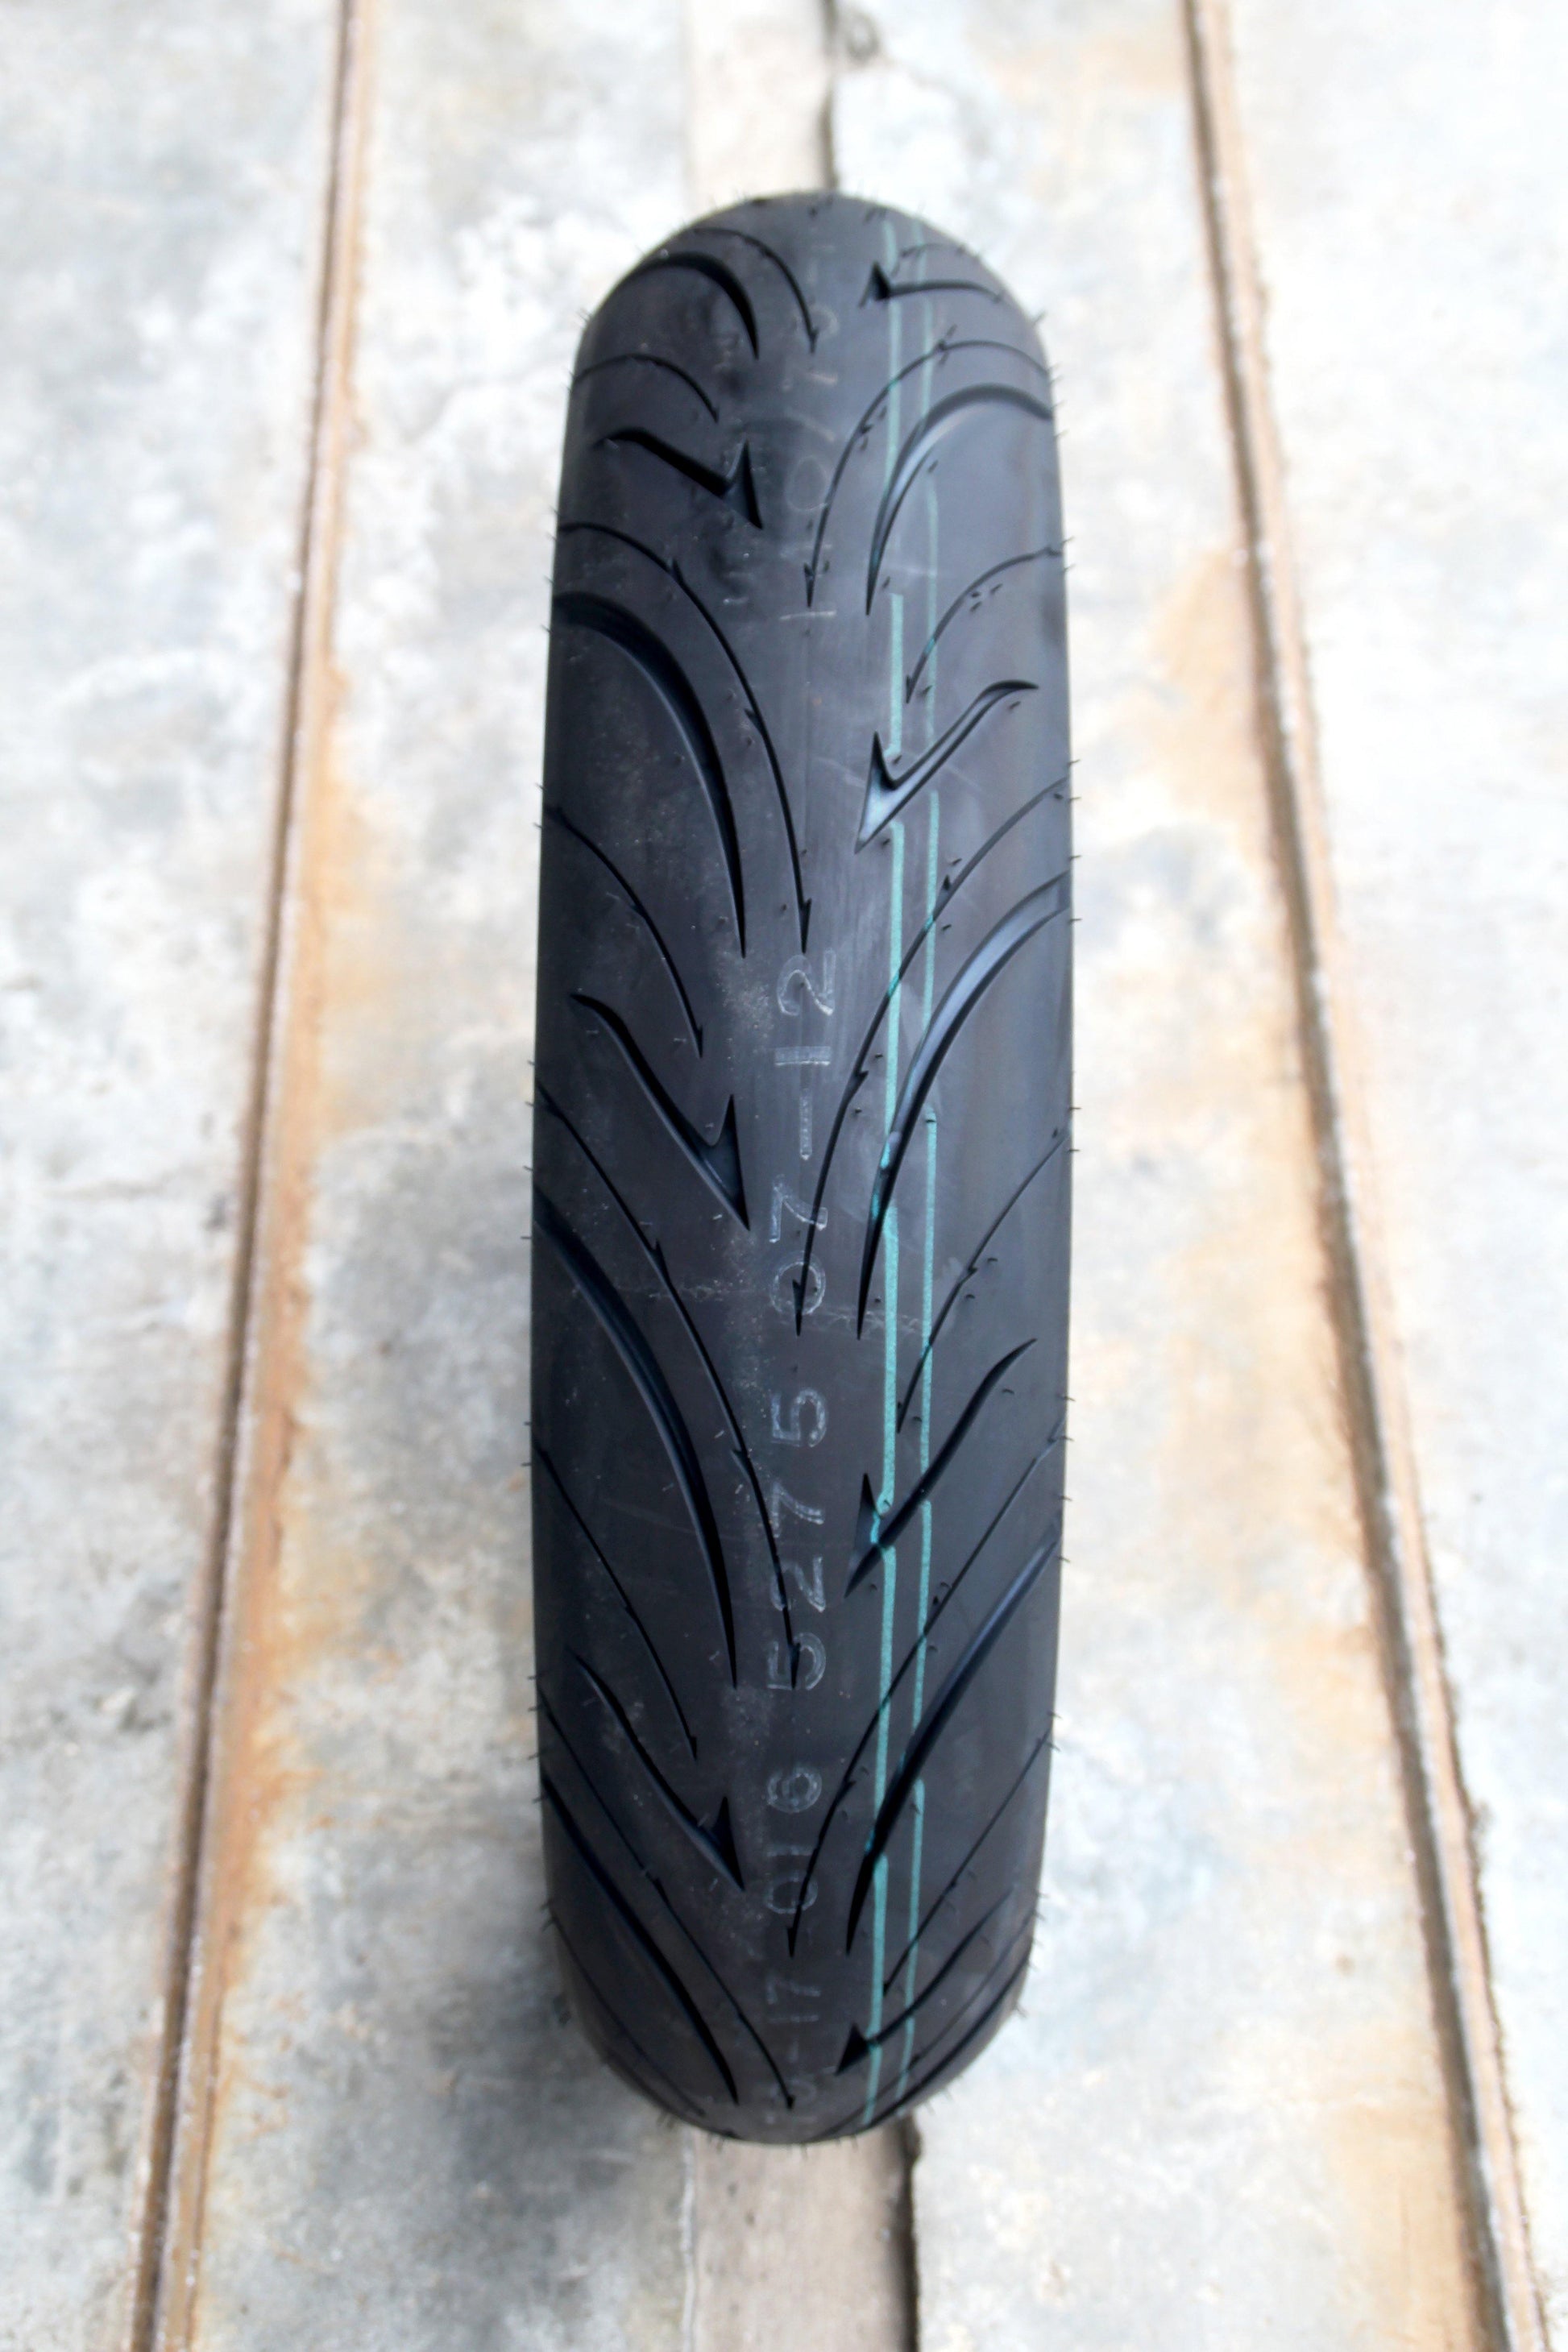 Shinko Tires SR016 Series (140/70-17) - Durian Bikers